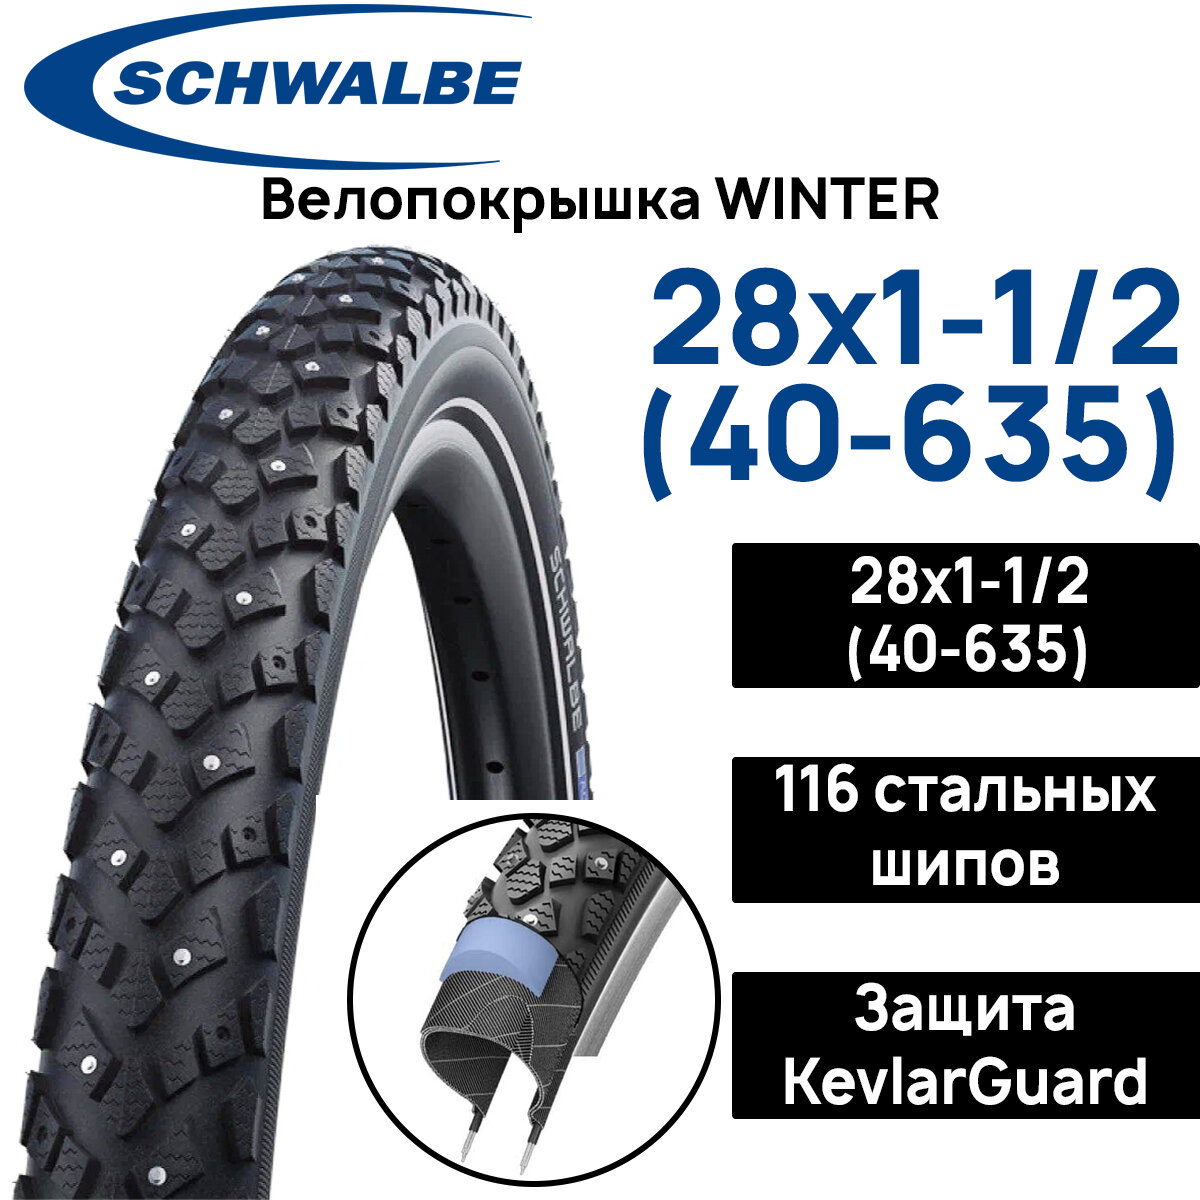 Покрышка для велосипеда зимняя Schwalbe Winter, 116 шипов, KevlarGuard, Twinskin, скандинавский размер 28x1-1/2 (40-635)